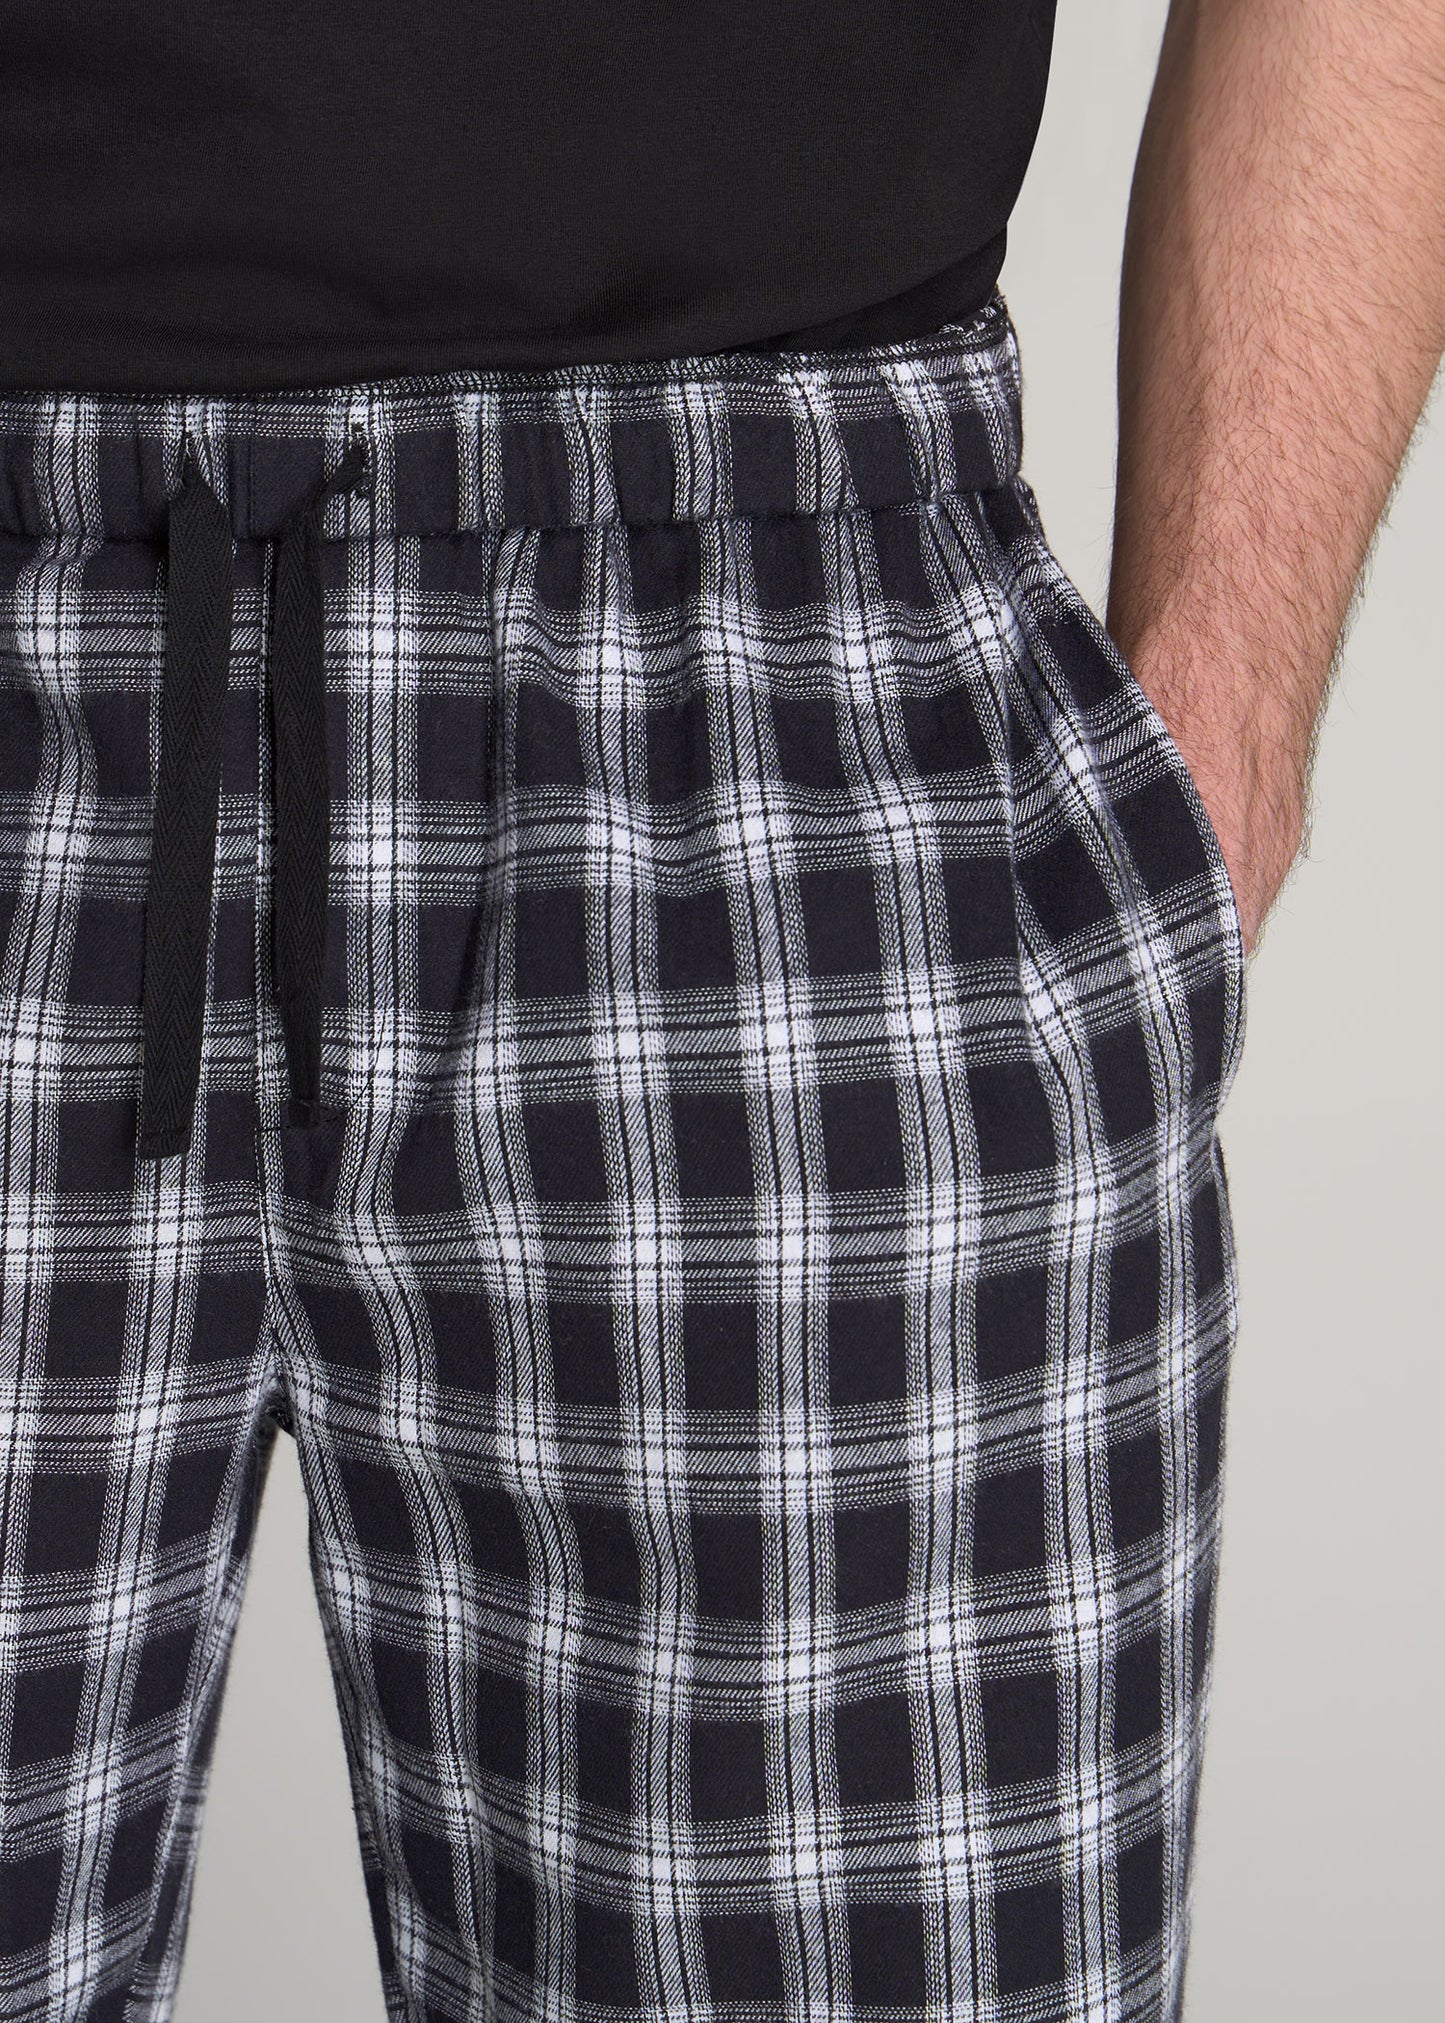 Guys Sleeping Pj Pants | Men's Pajama Pants | Men's Pj Bottom Trousers –  Mona Lulu